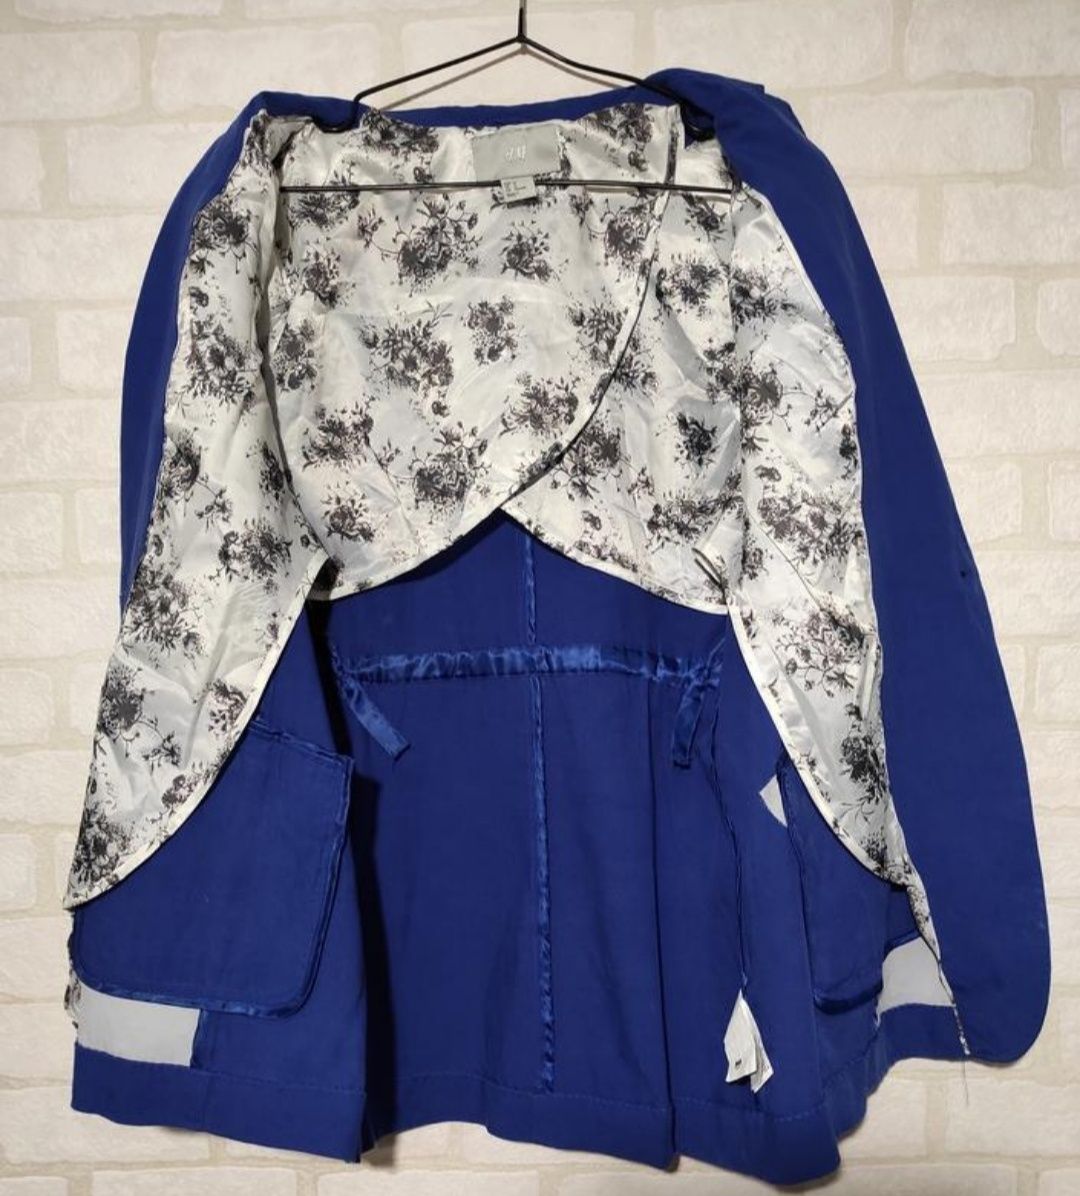 Пиджак цвета индиго от бренда H&M. Унисекс
Длина 74 см
длина рукава 60